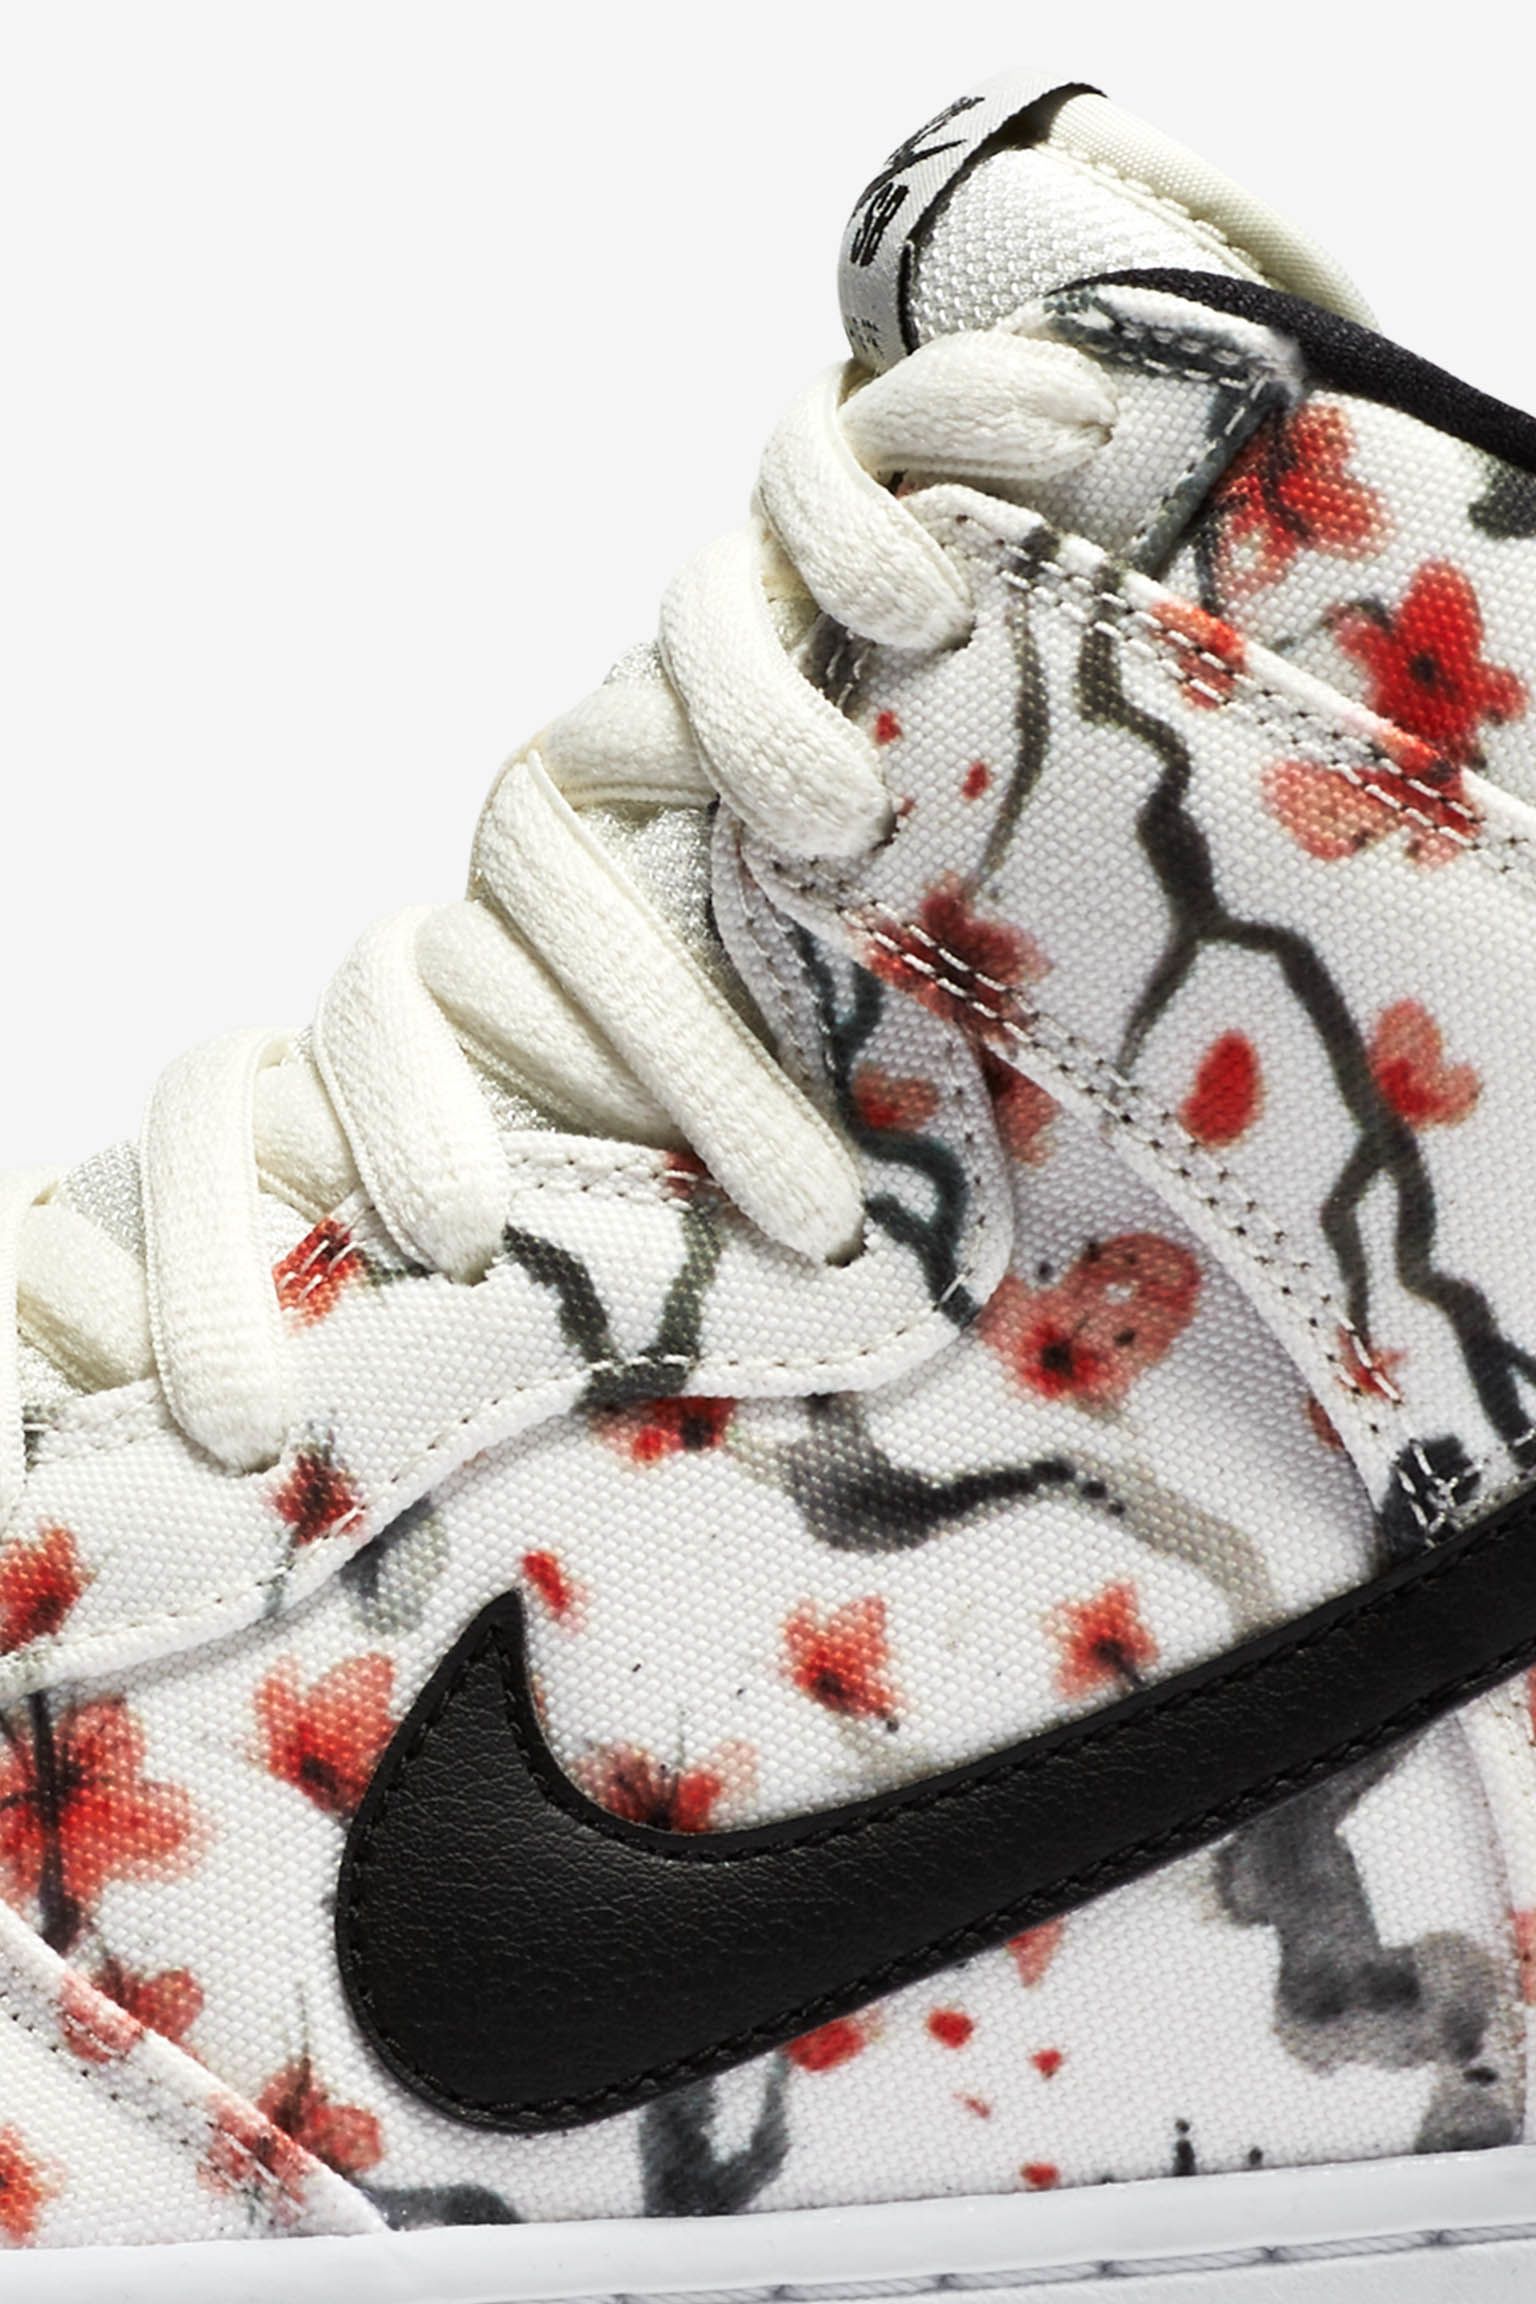 Nike Dunk High Pro SB 'Cherry Blossom'. Nike SNKRS